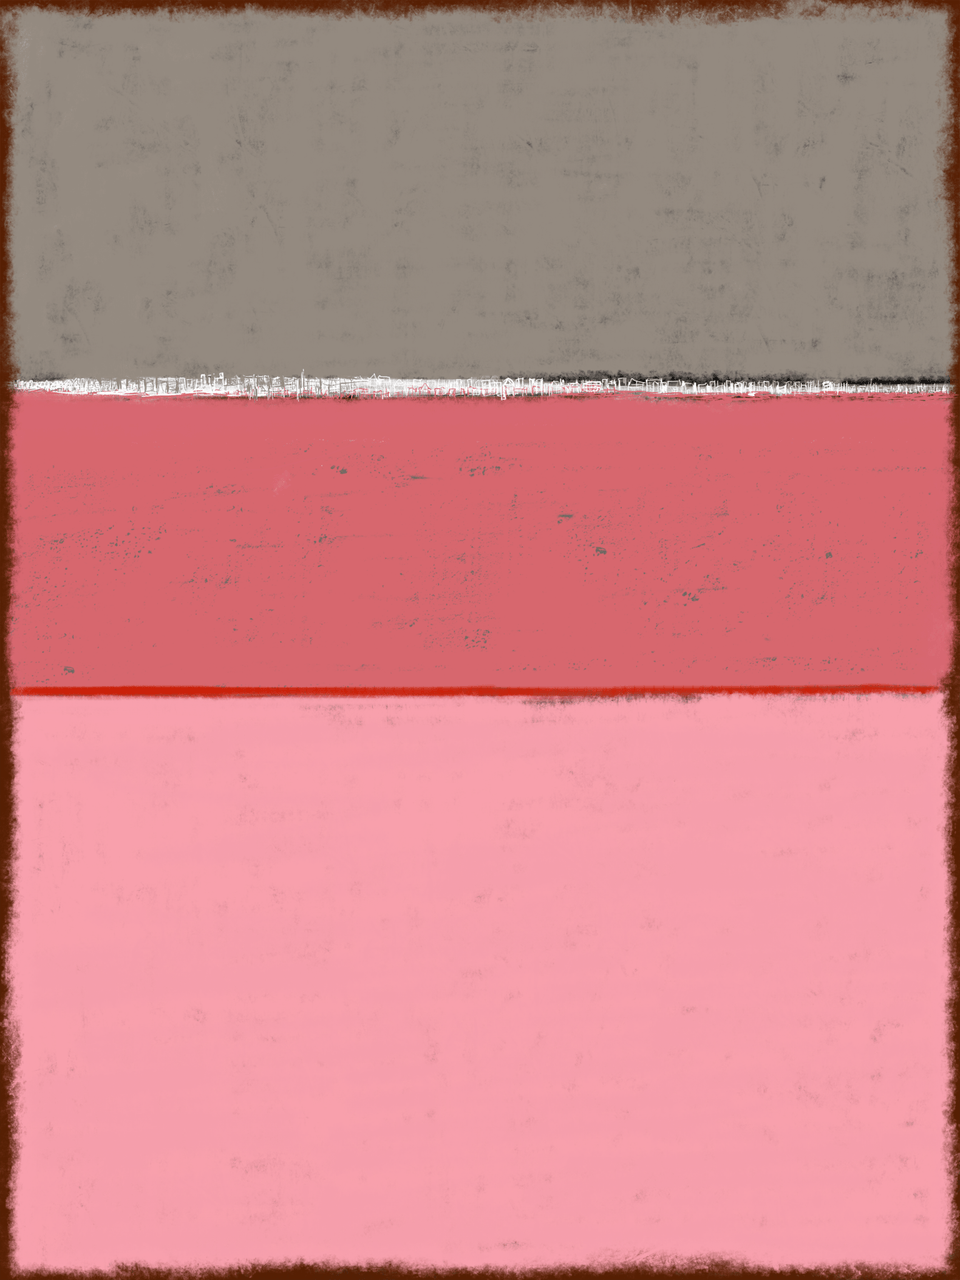  Tableau abstrait rose gris style Rothko - Tableau design  artiste peintre Ludwig Mario  galerie TACT Art abstrait & contemporain